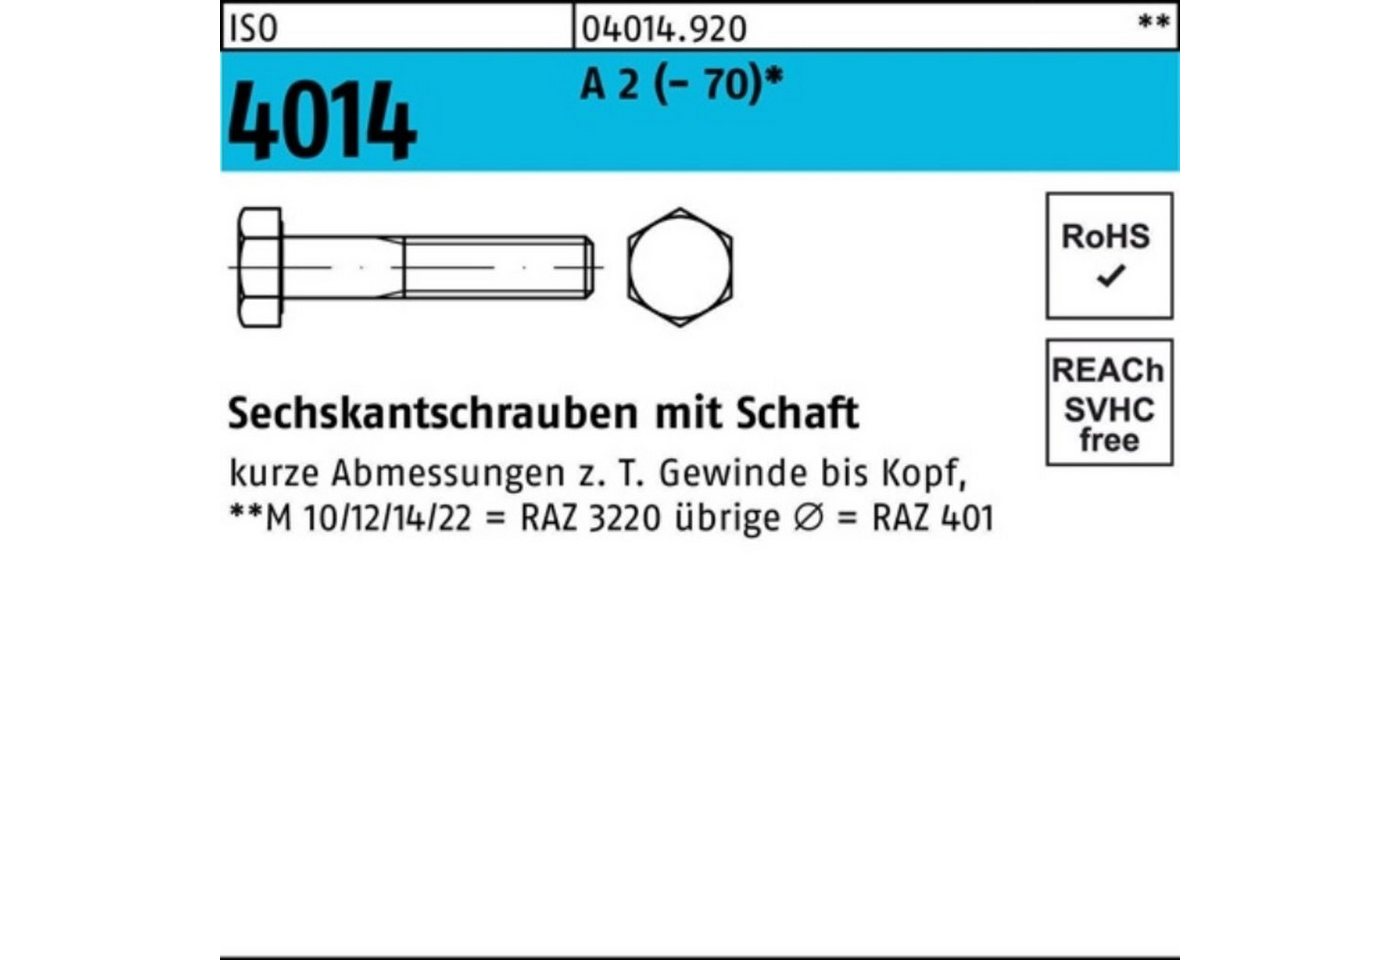 Bufab Sechskantschraube 100er Pack Sechskantschraube ISO 4014 Schaft M20x 70 A 2 (70) 1 Stü von Bufab